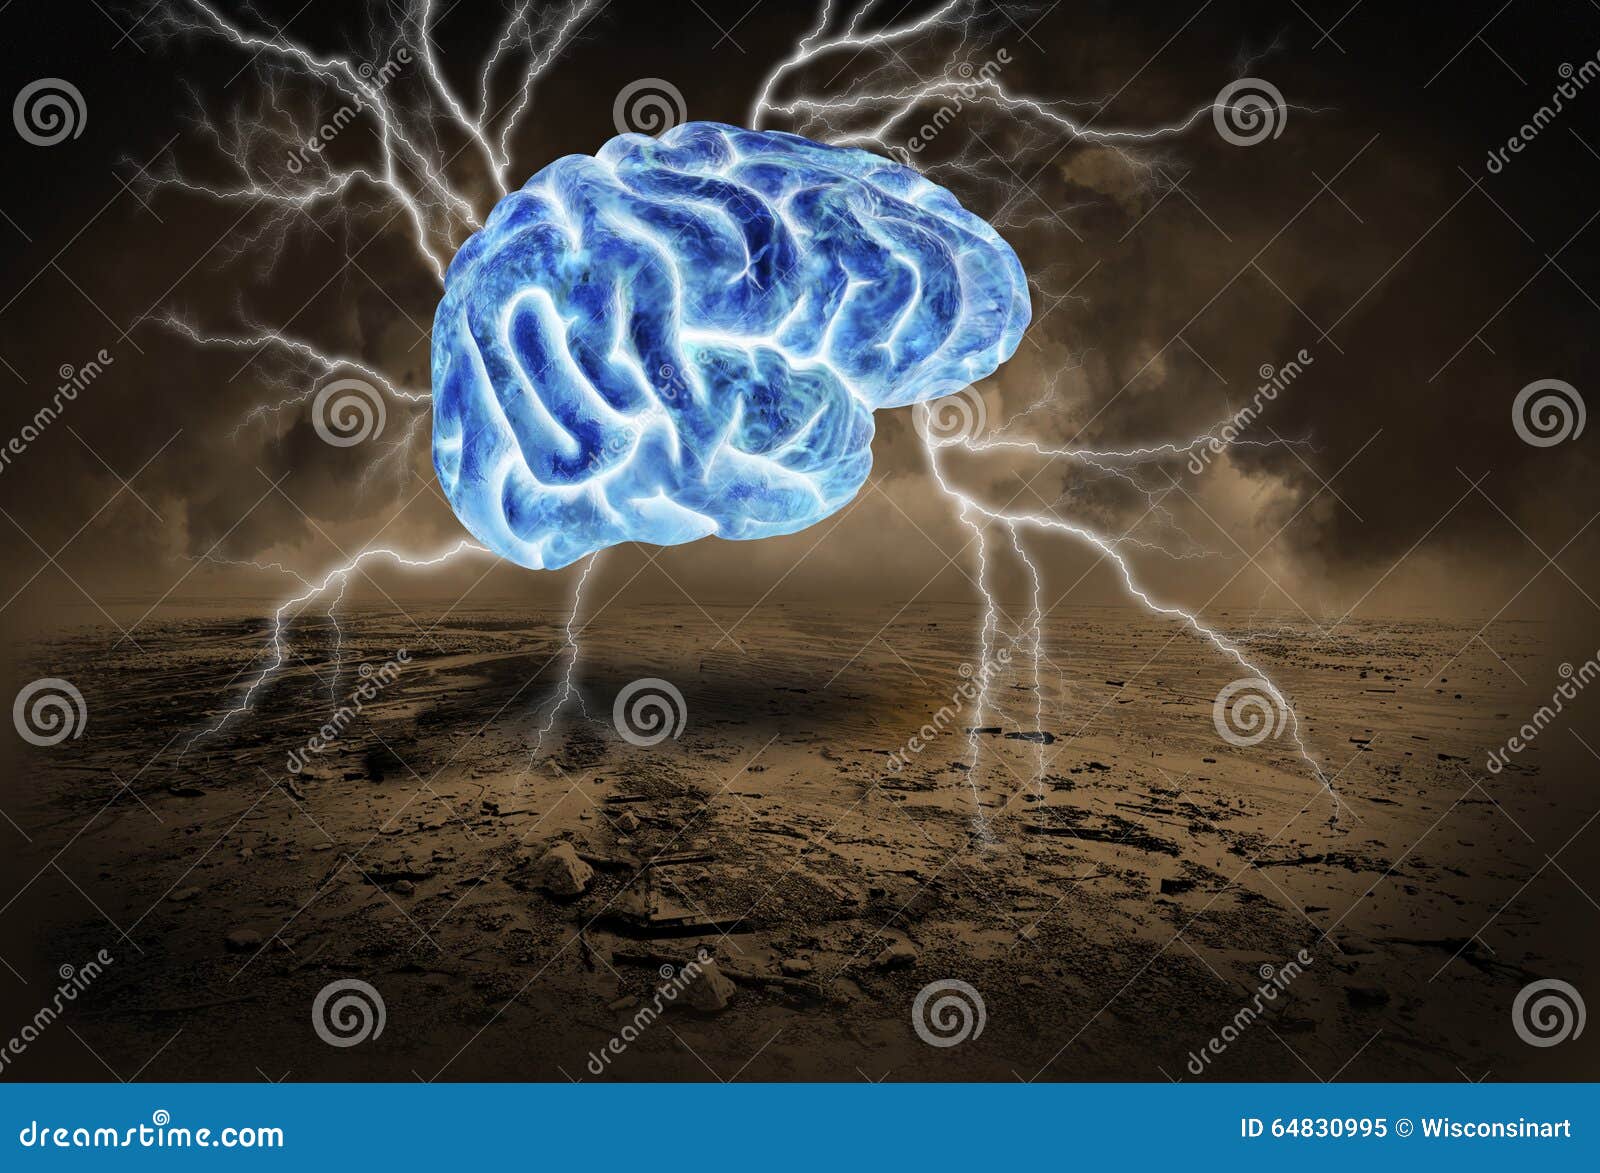 human brain, storm, brainstorm, brainstorming